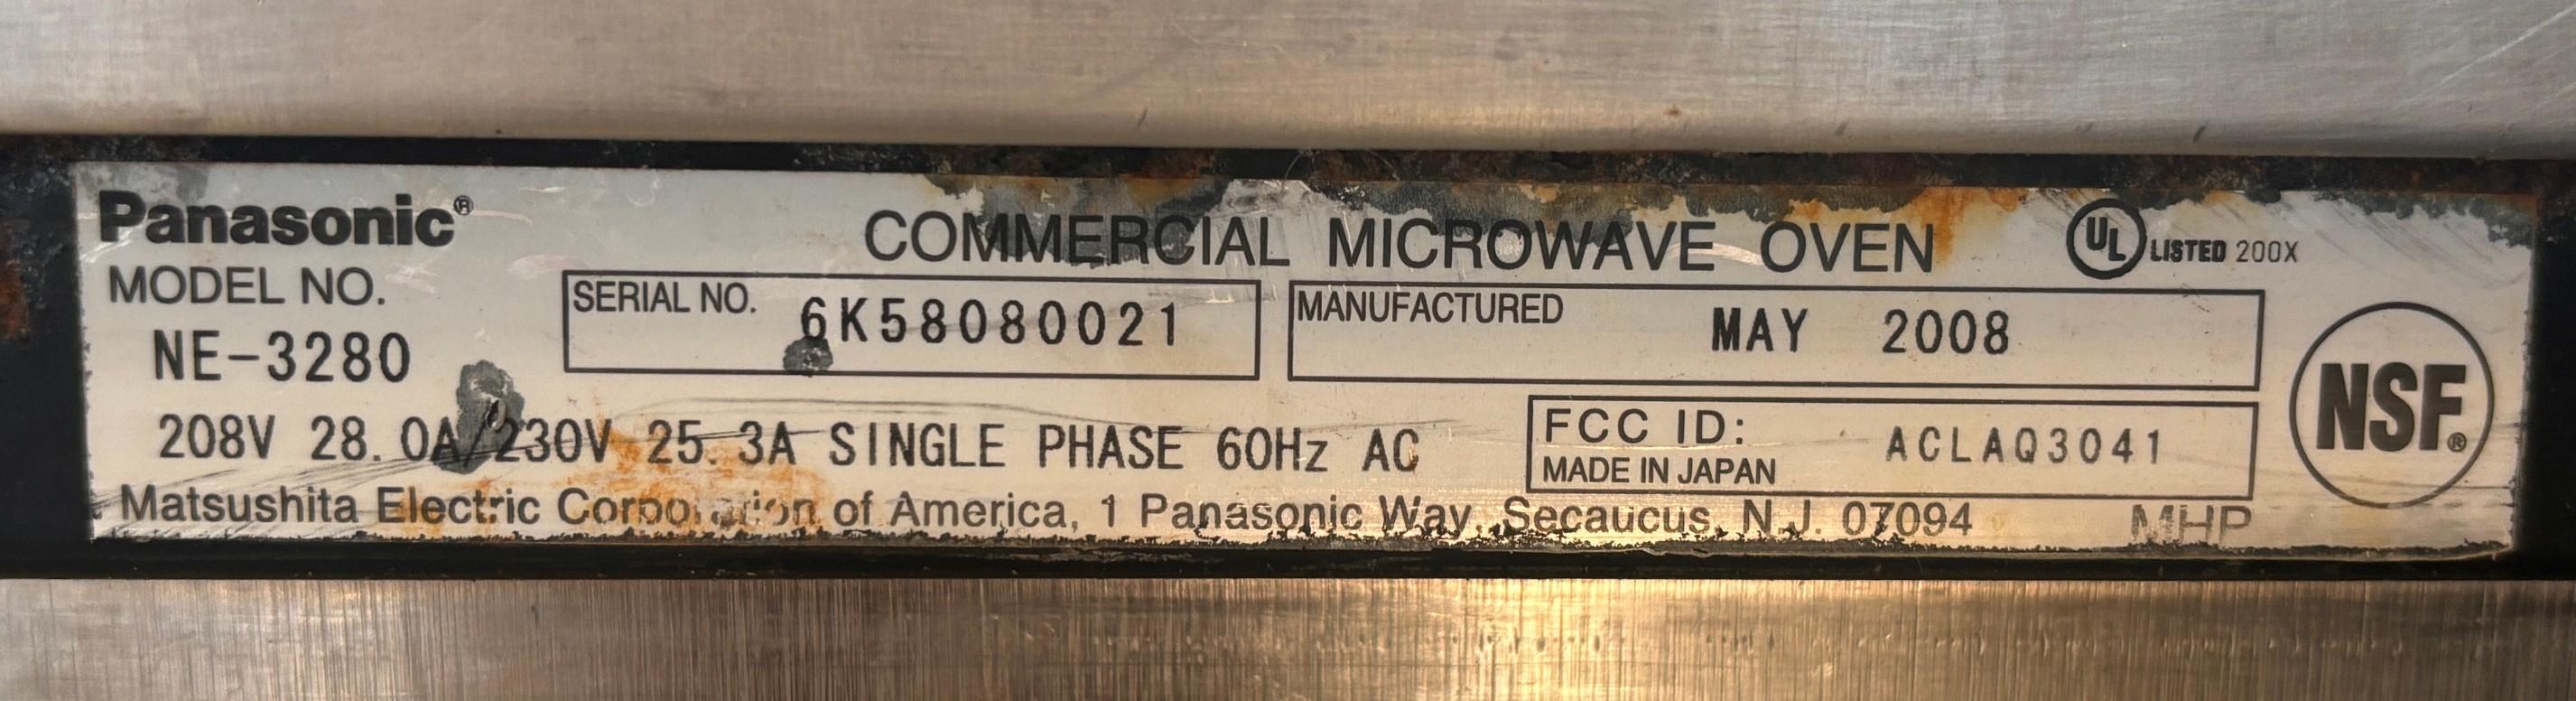 Panasonic Commercial Microwave Model# NE-3280